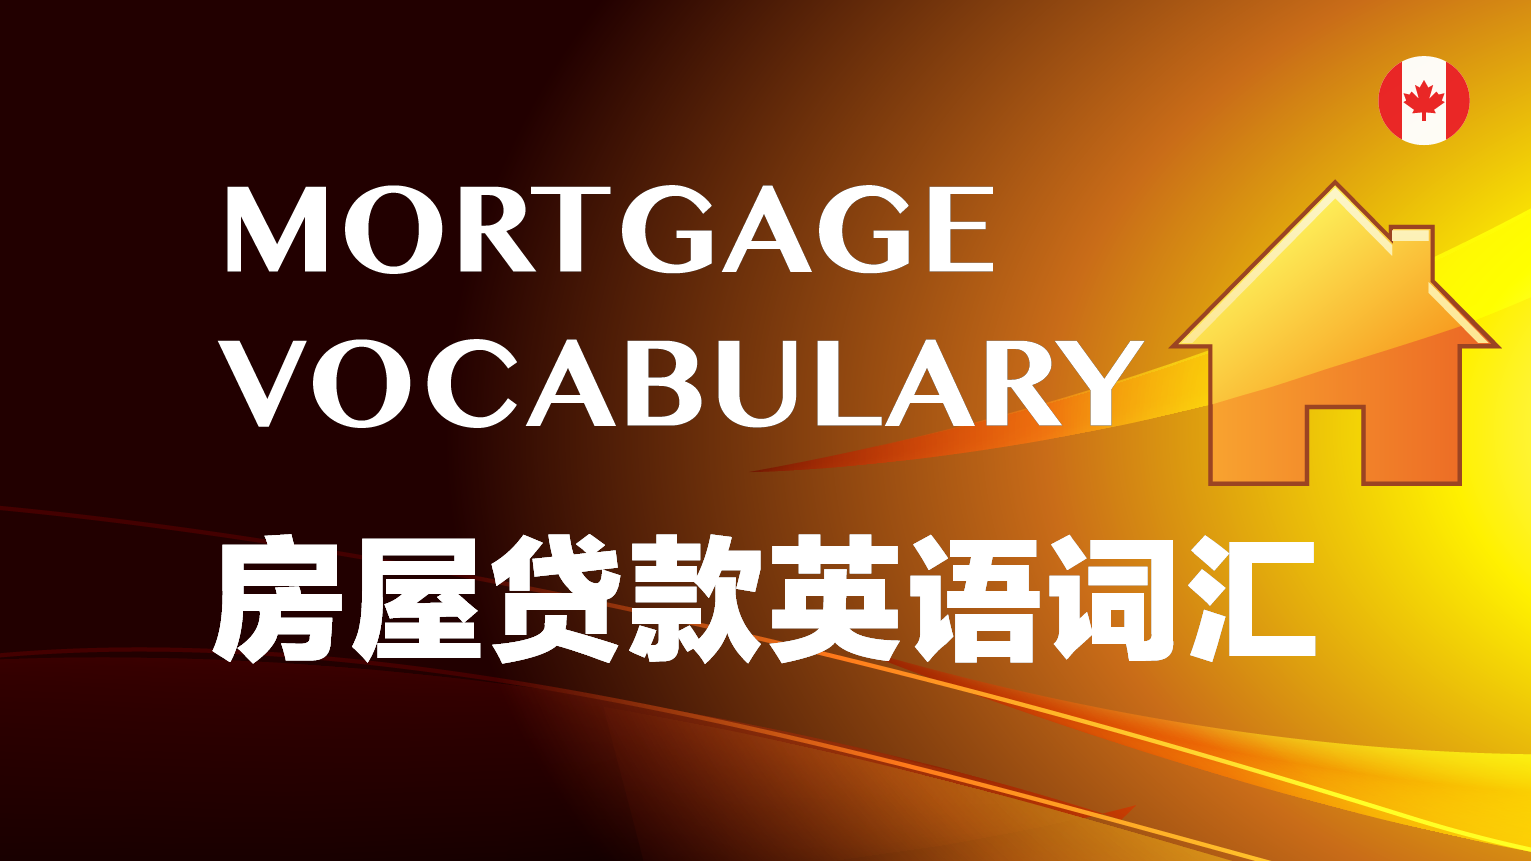 Mortgage Vocabulary